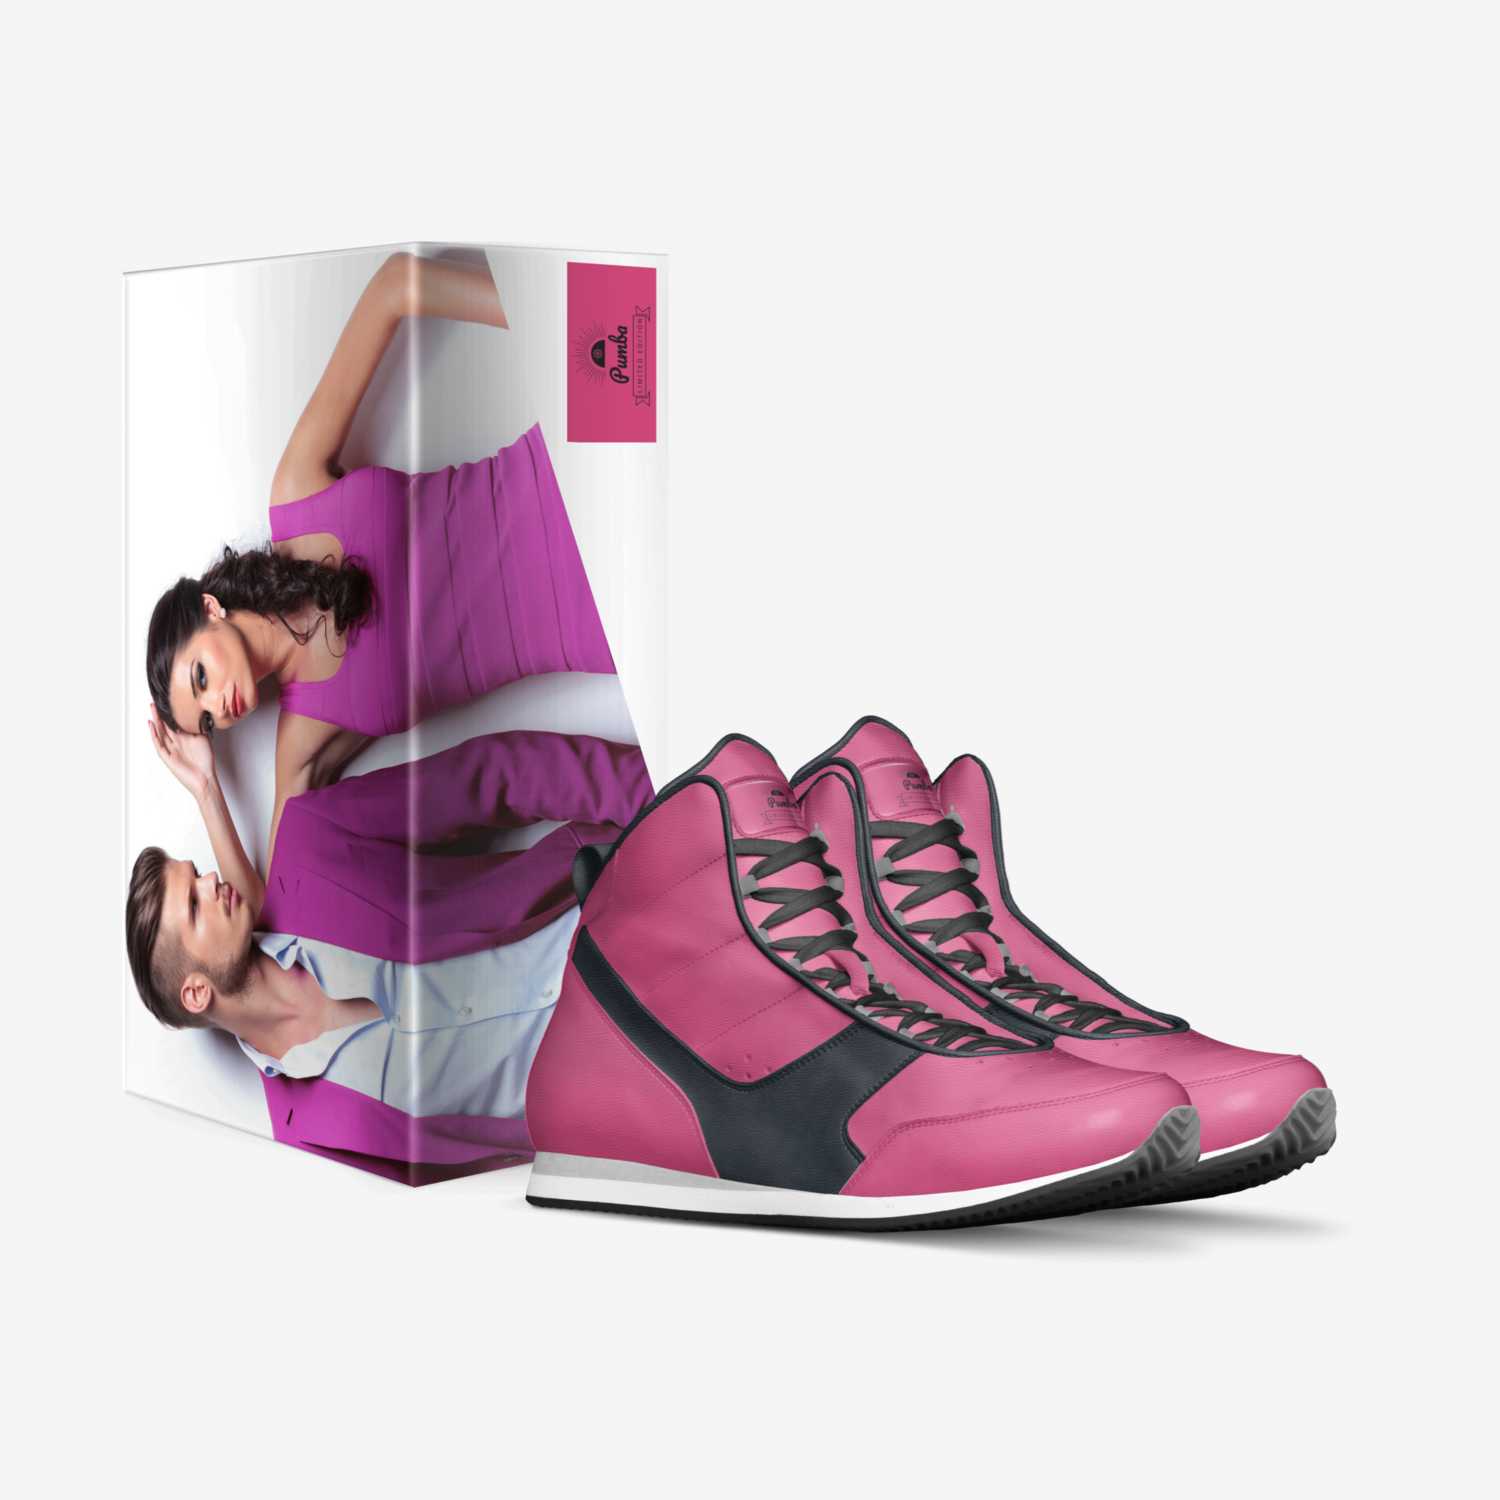 Pumba custom made in Italy shoes by Kiara | Box view